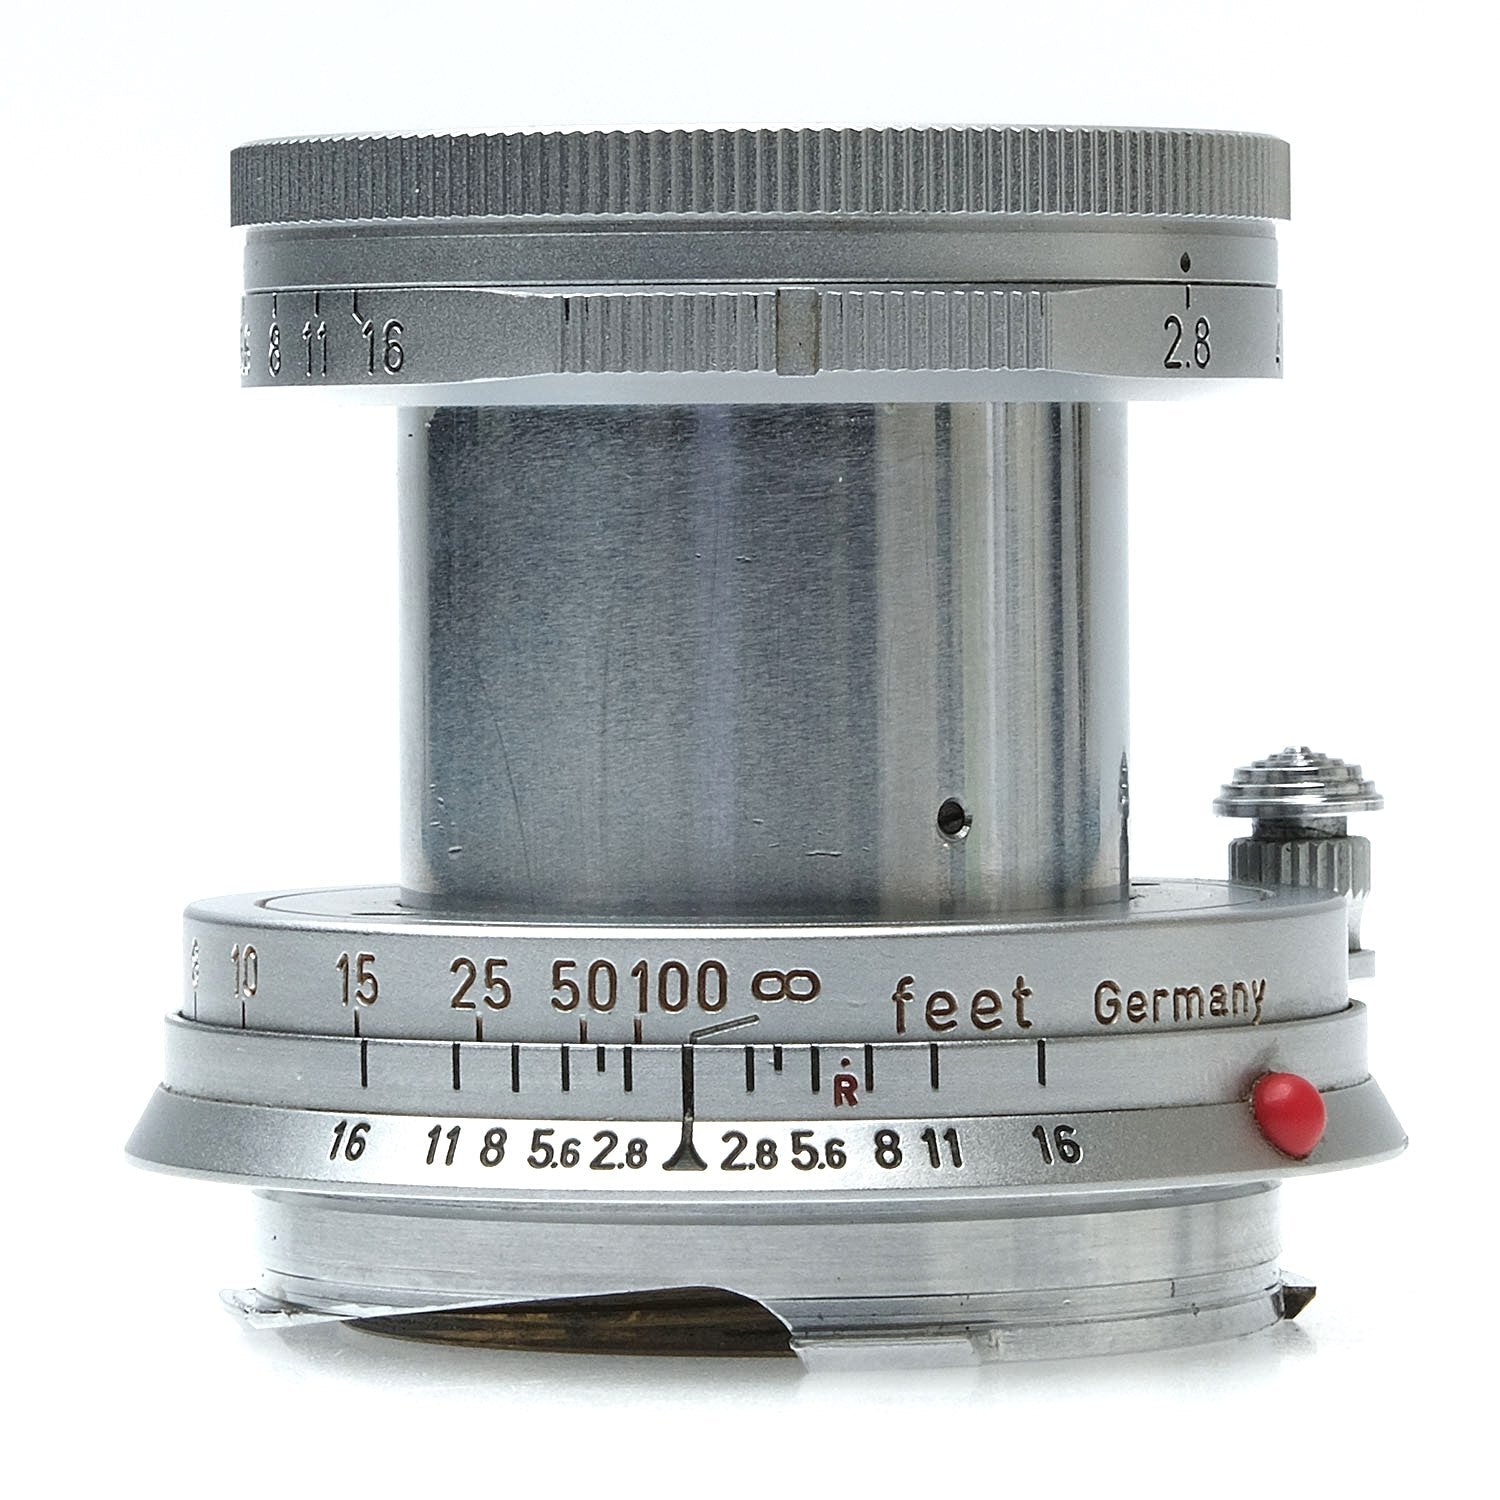 Leica 5cm f2.8 Elmar haze 1550638